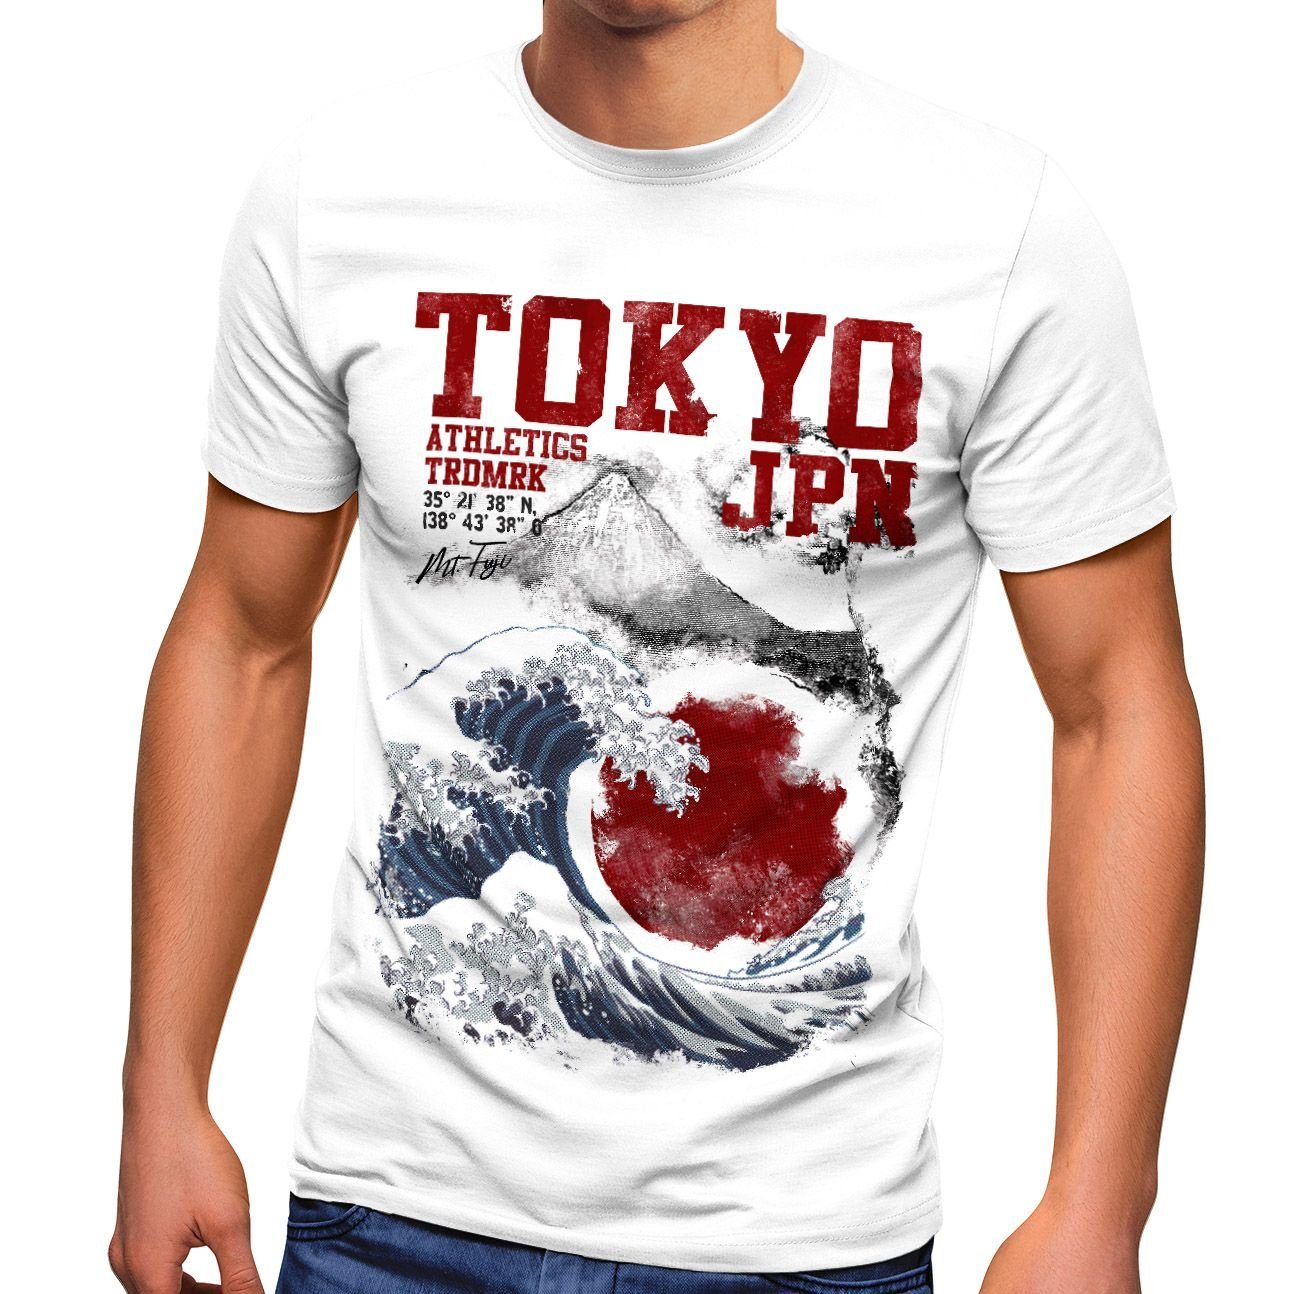 Neverless Print-Shirt Herren Wafe Neverless® Japan Big Welle Streetstyle Tokyo Print Fashion T-Shirt Fuji Style mit